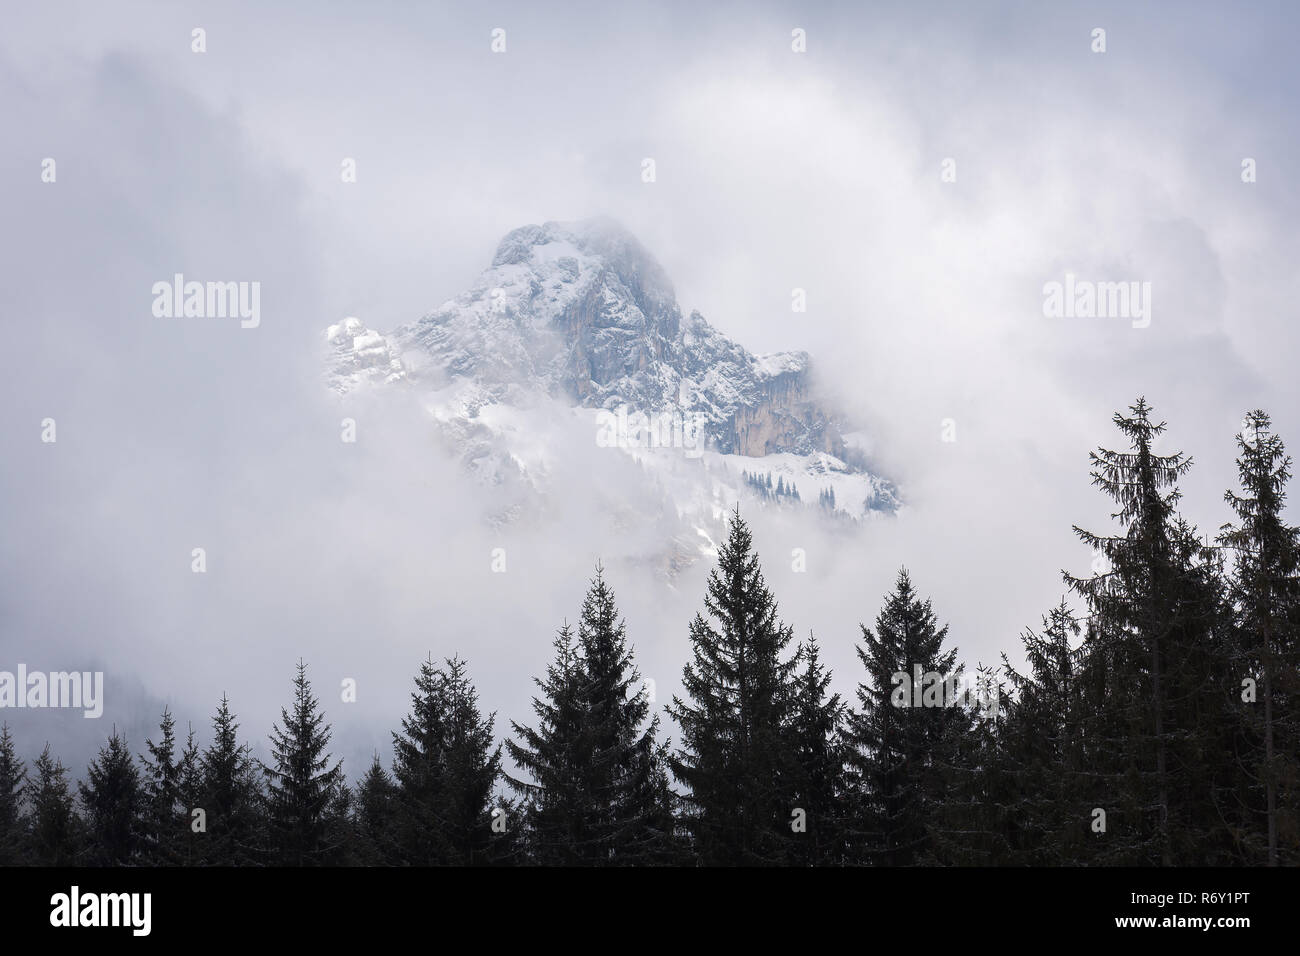 Berg zwischen Wolken im Winter hinter Tannen Foto de stock